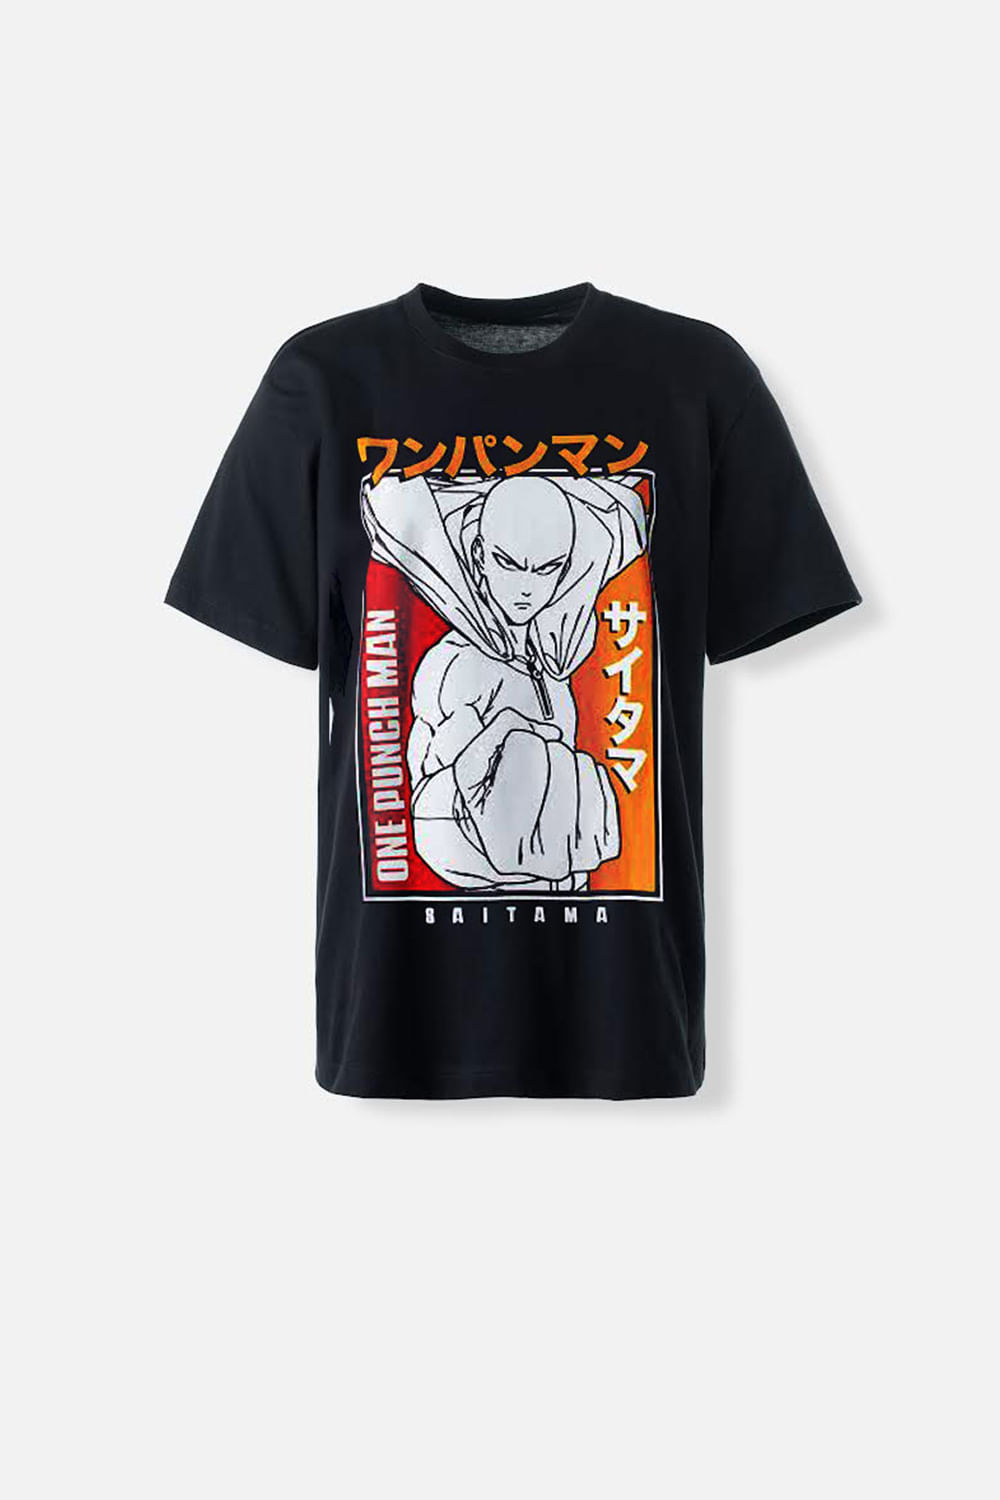 Camiseta de One Punch Man manga corta negra género neutro XS-0